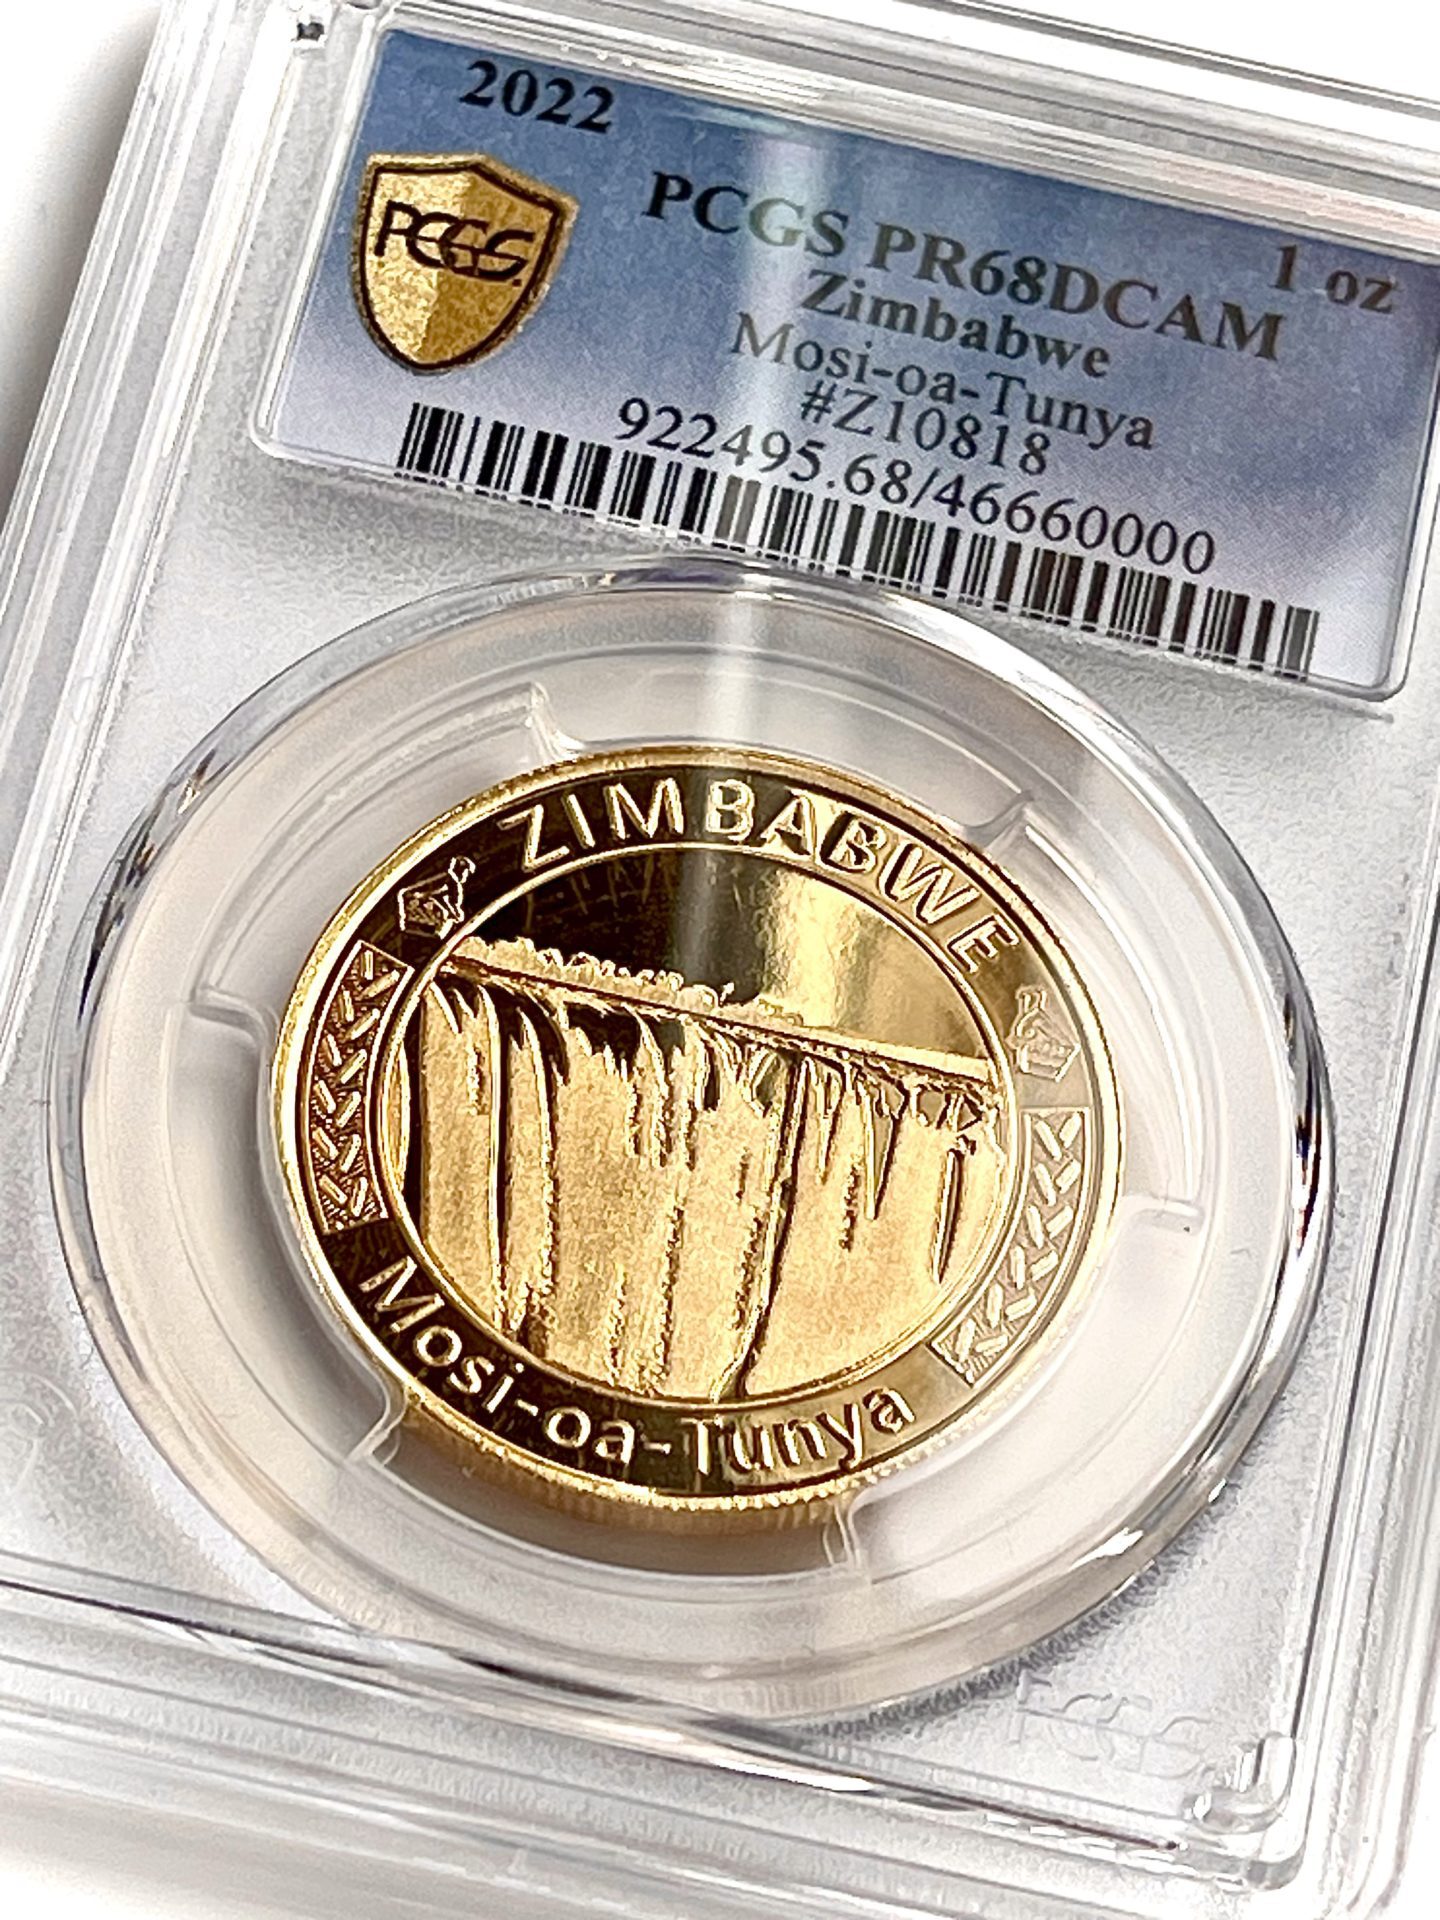 Zimbabwe 2022 1oz Gold PCGS PR68 dcam